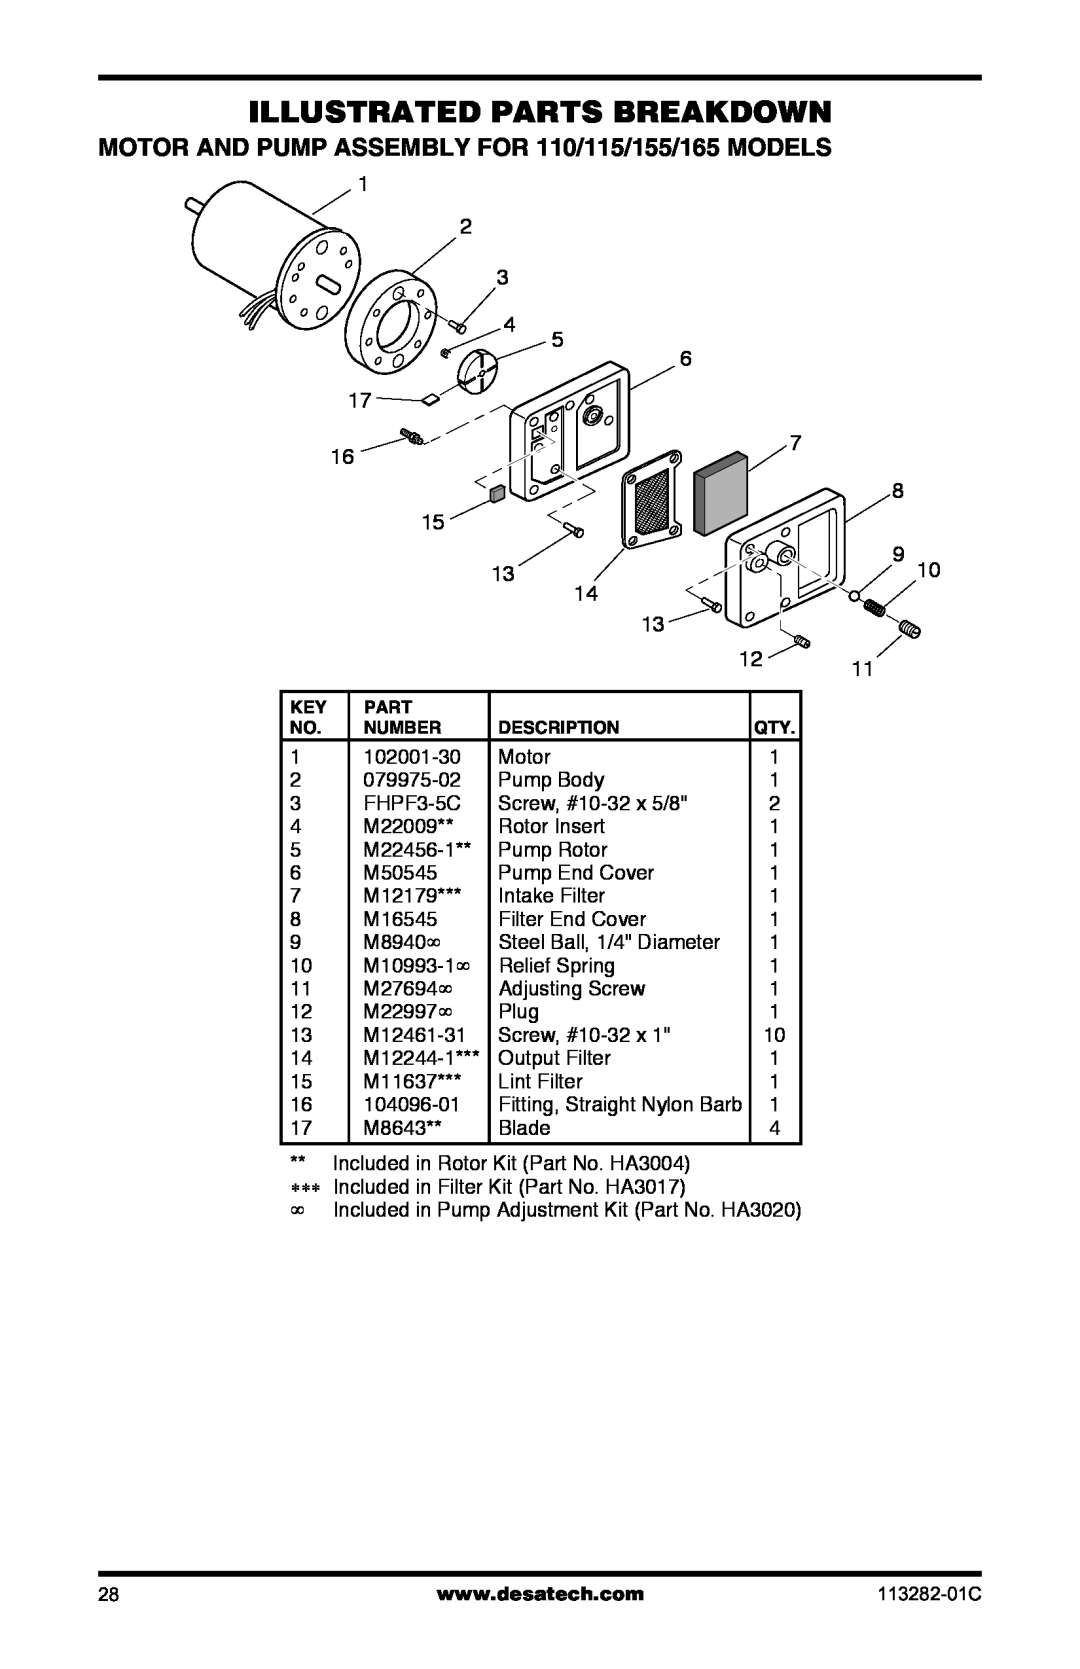 Desa BTU/HR owner manual Illustrated Parts Breakdown, 102001-30 